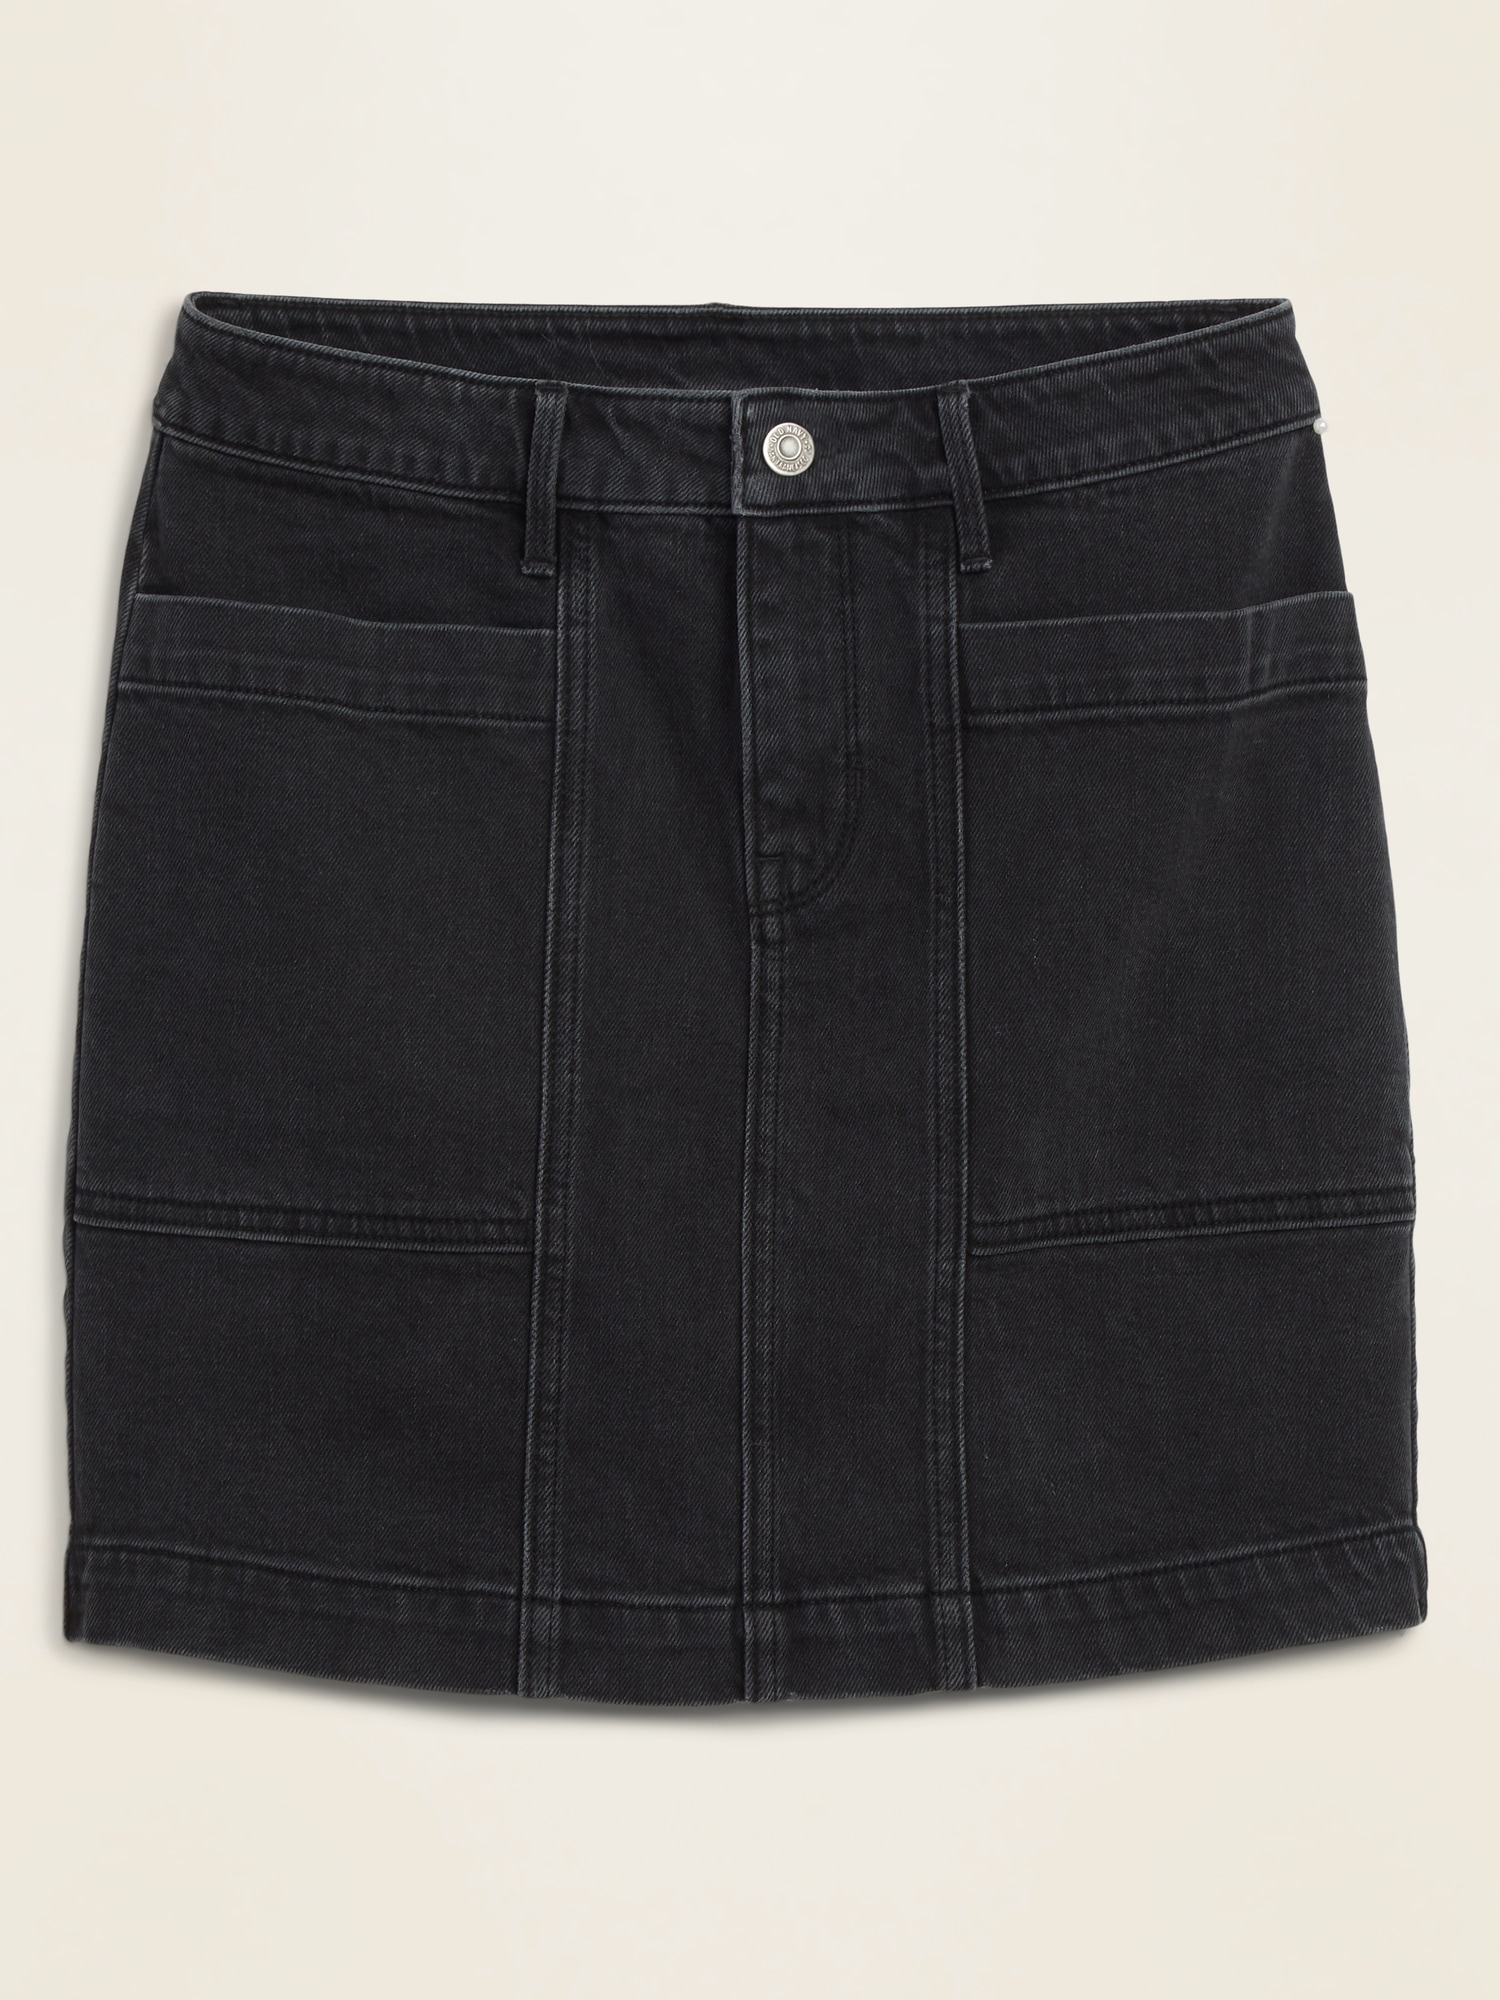 high waisted black jean skirt